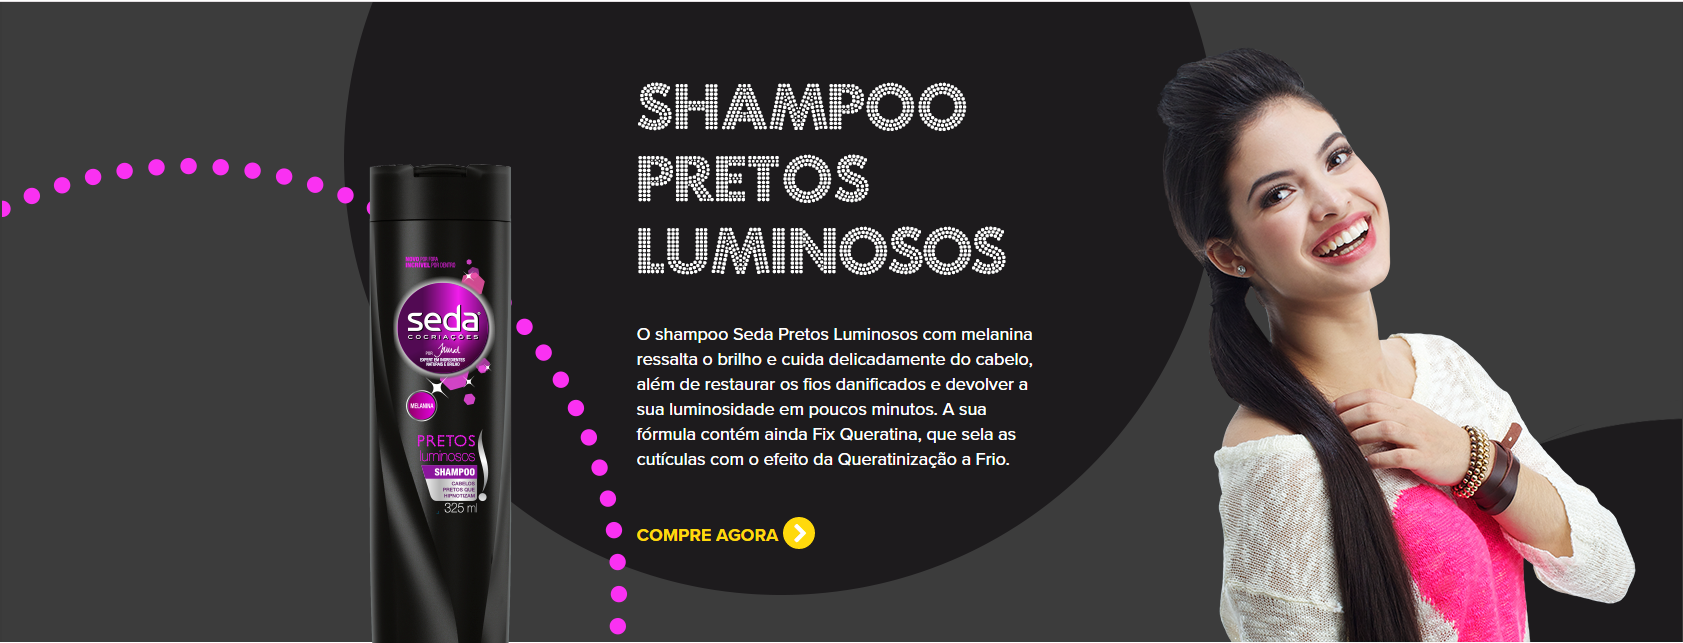 Shampoo Seda Pretos Luminosos 325ml